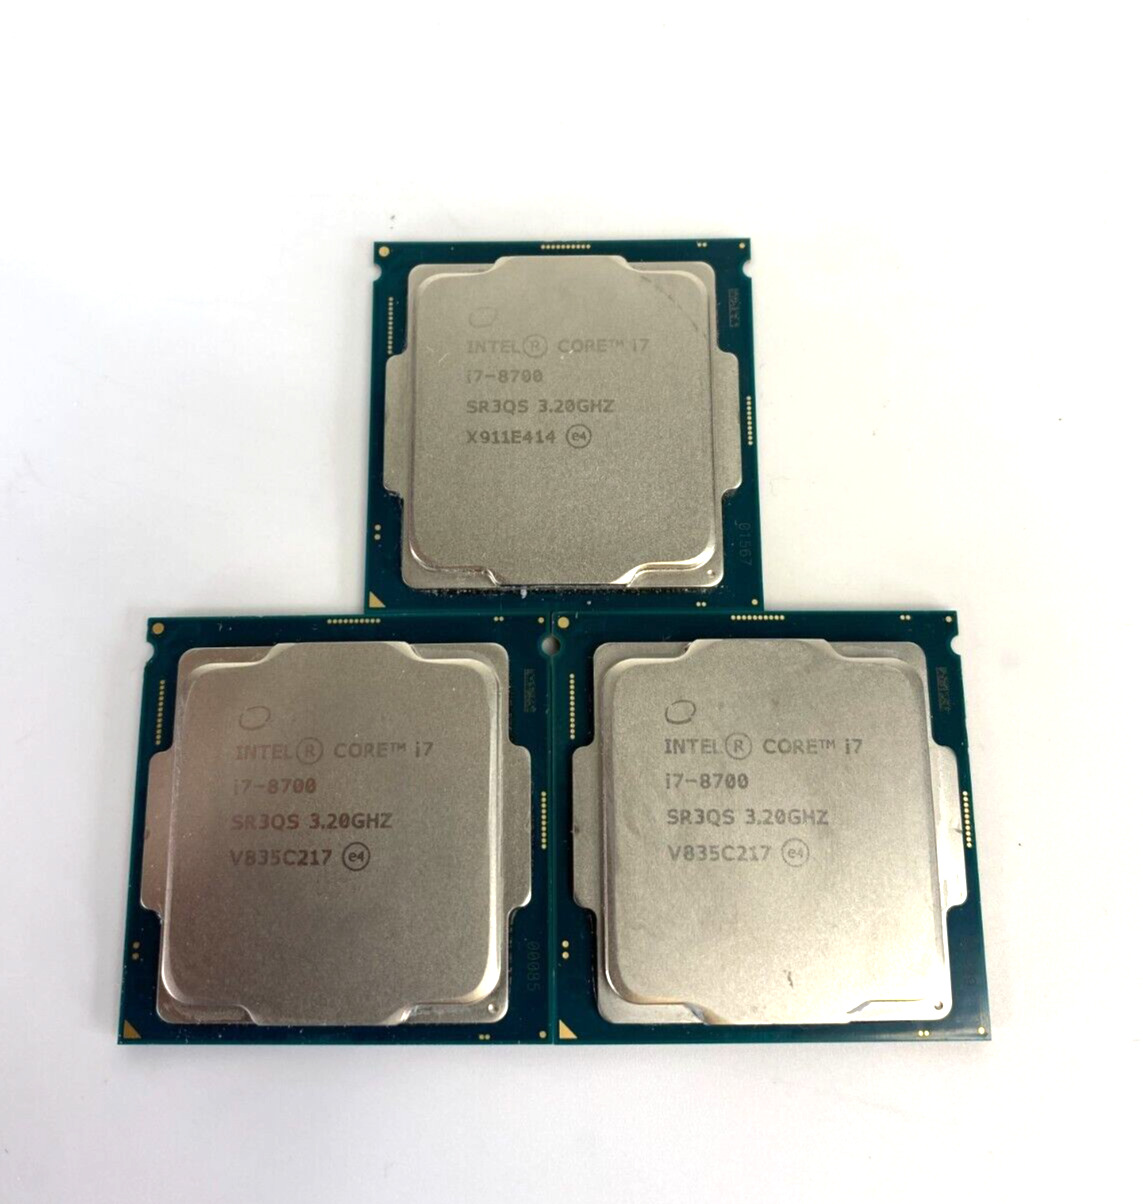 (Lot of 3) Intel Core i7-8700 SR3QS 3.20GHz 12 MB Cache 6 Core CPU Processors